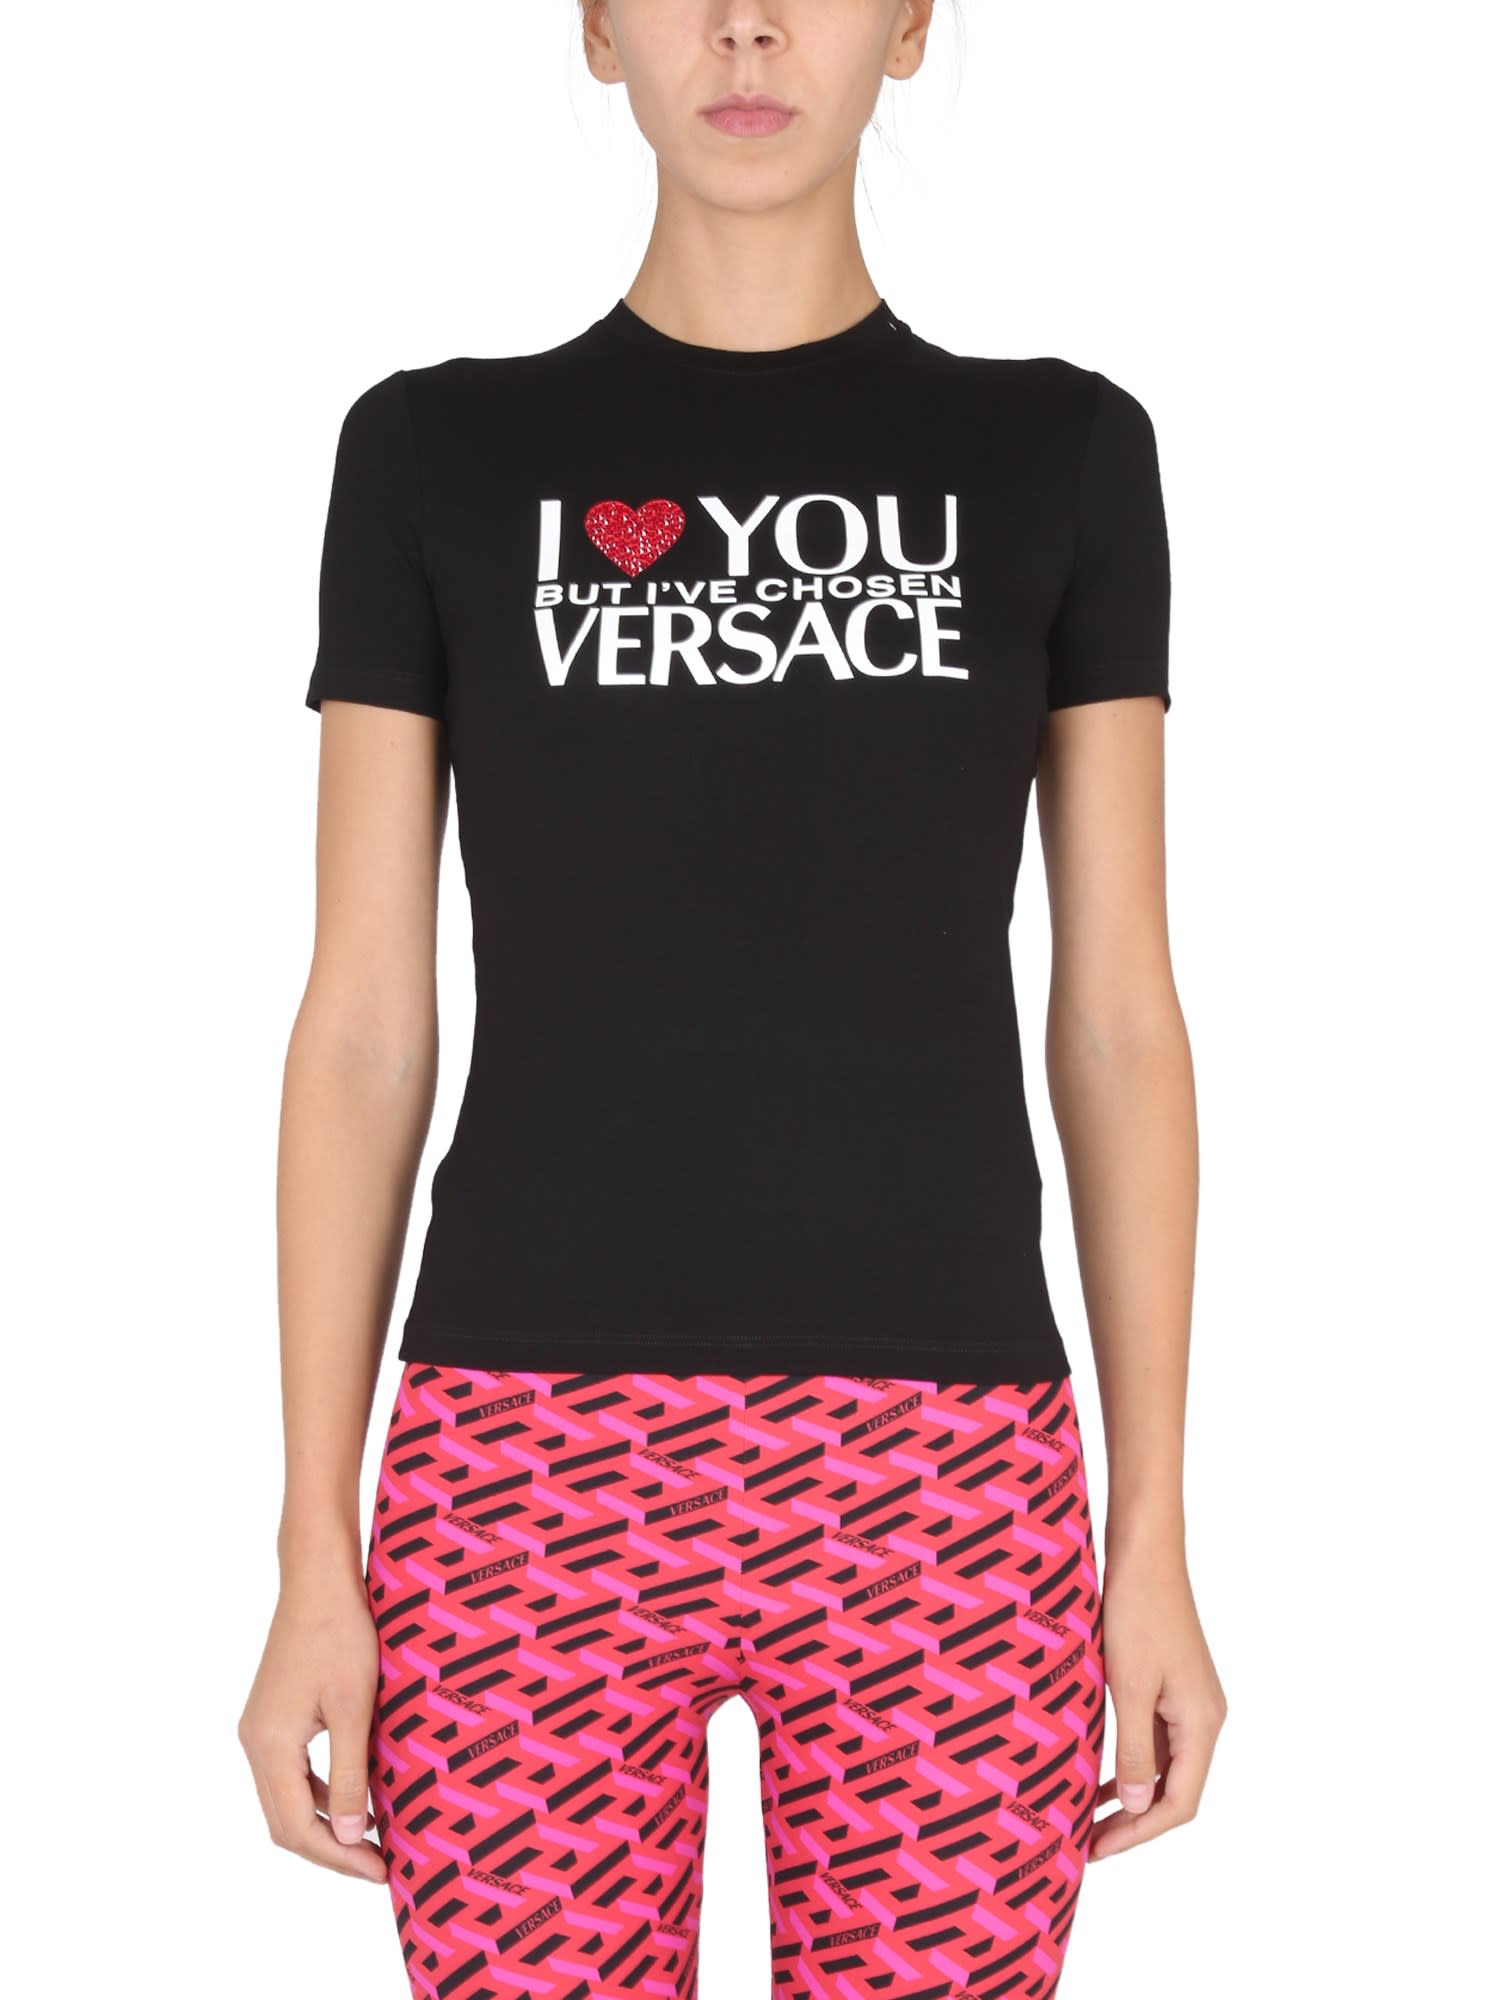 Versace T-shirt i You But.